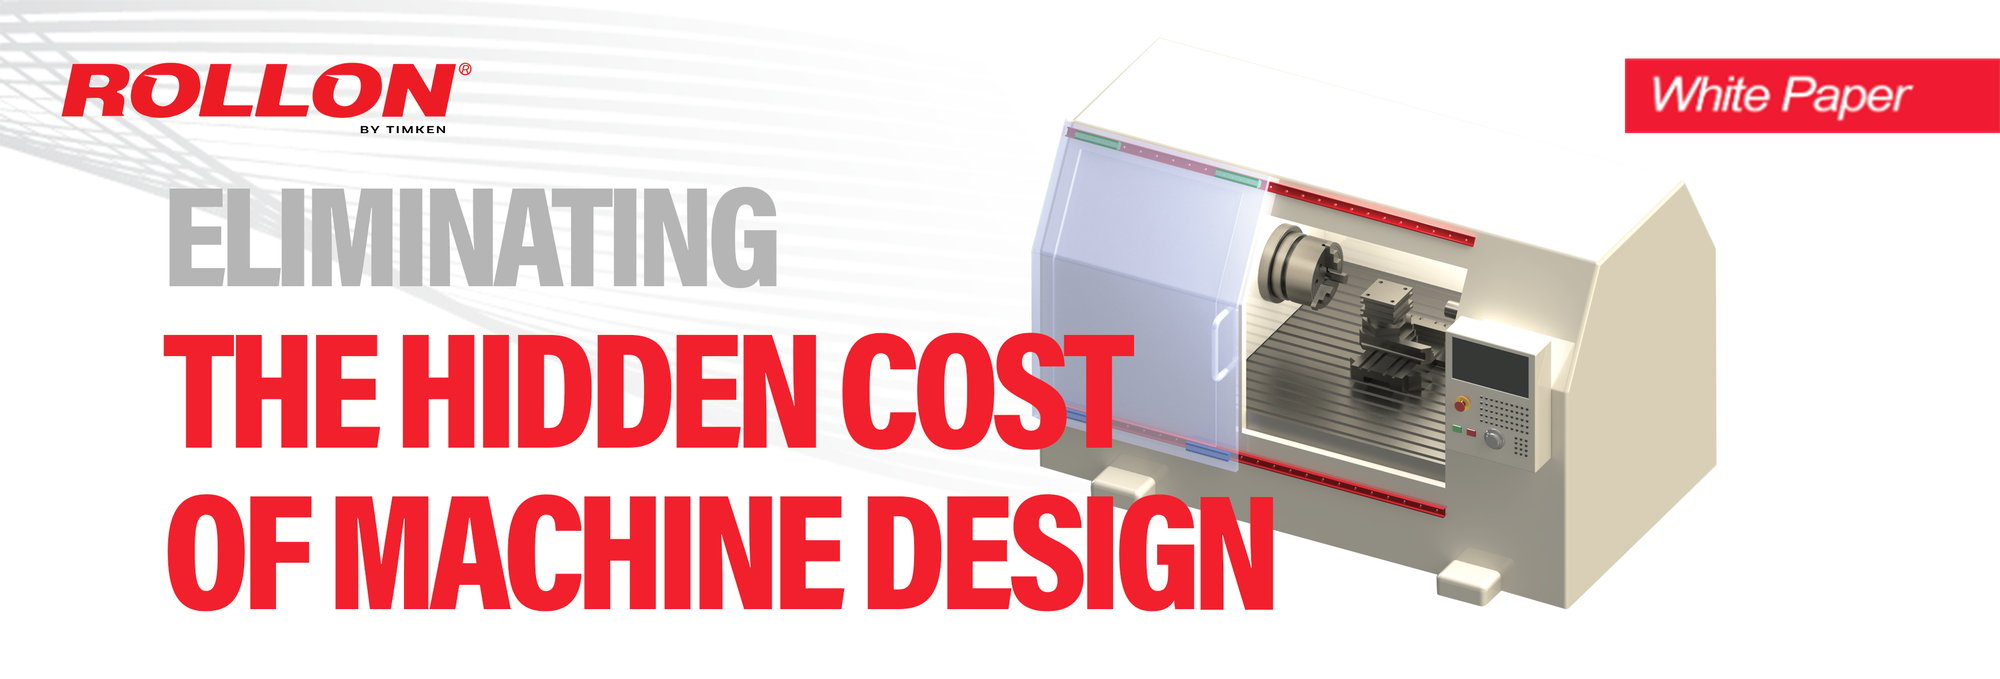 Eliminating_The_Hidden_Costs_of_Machine_Design